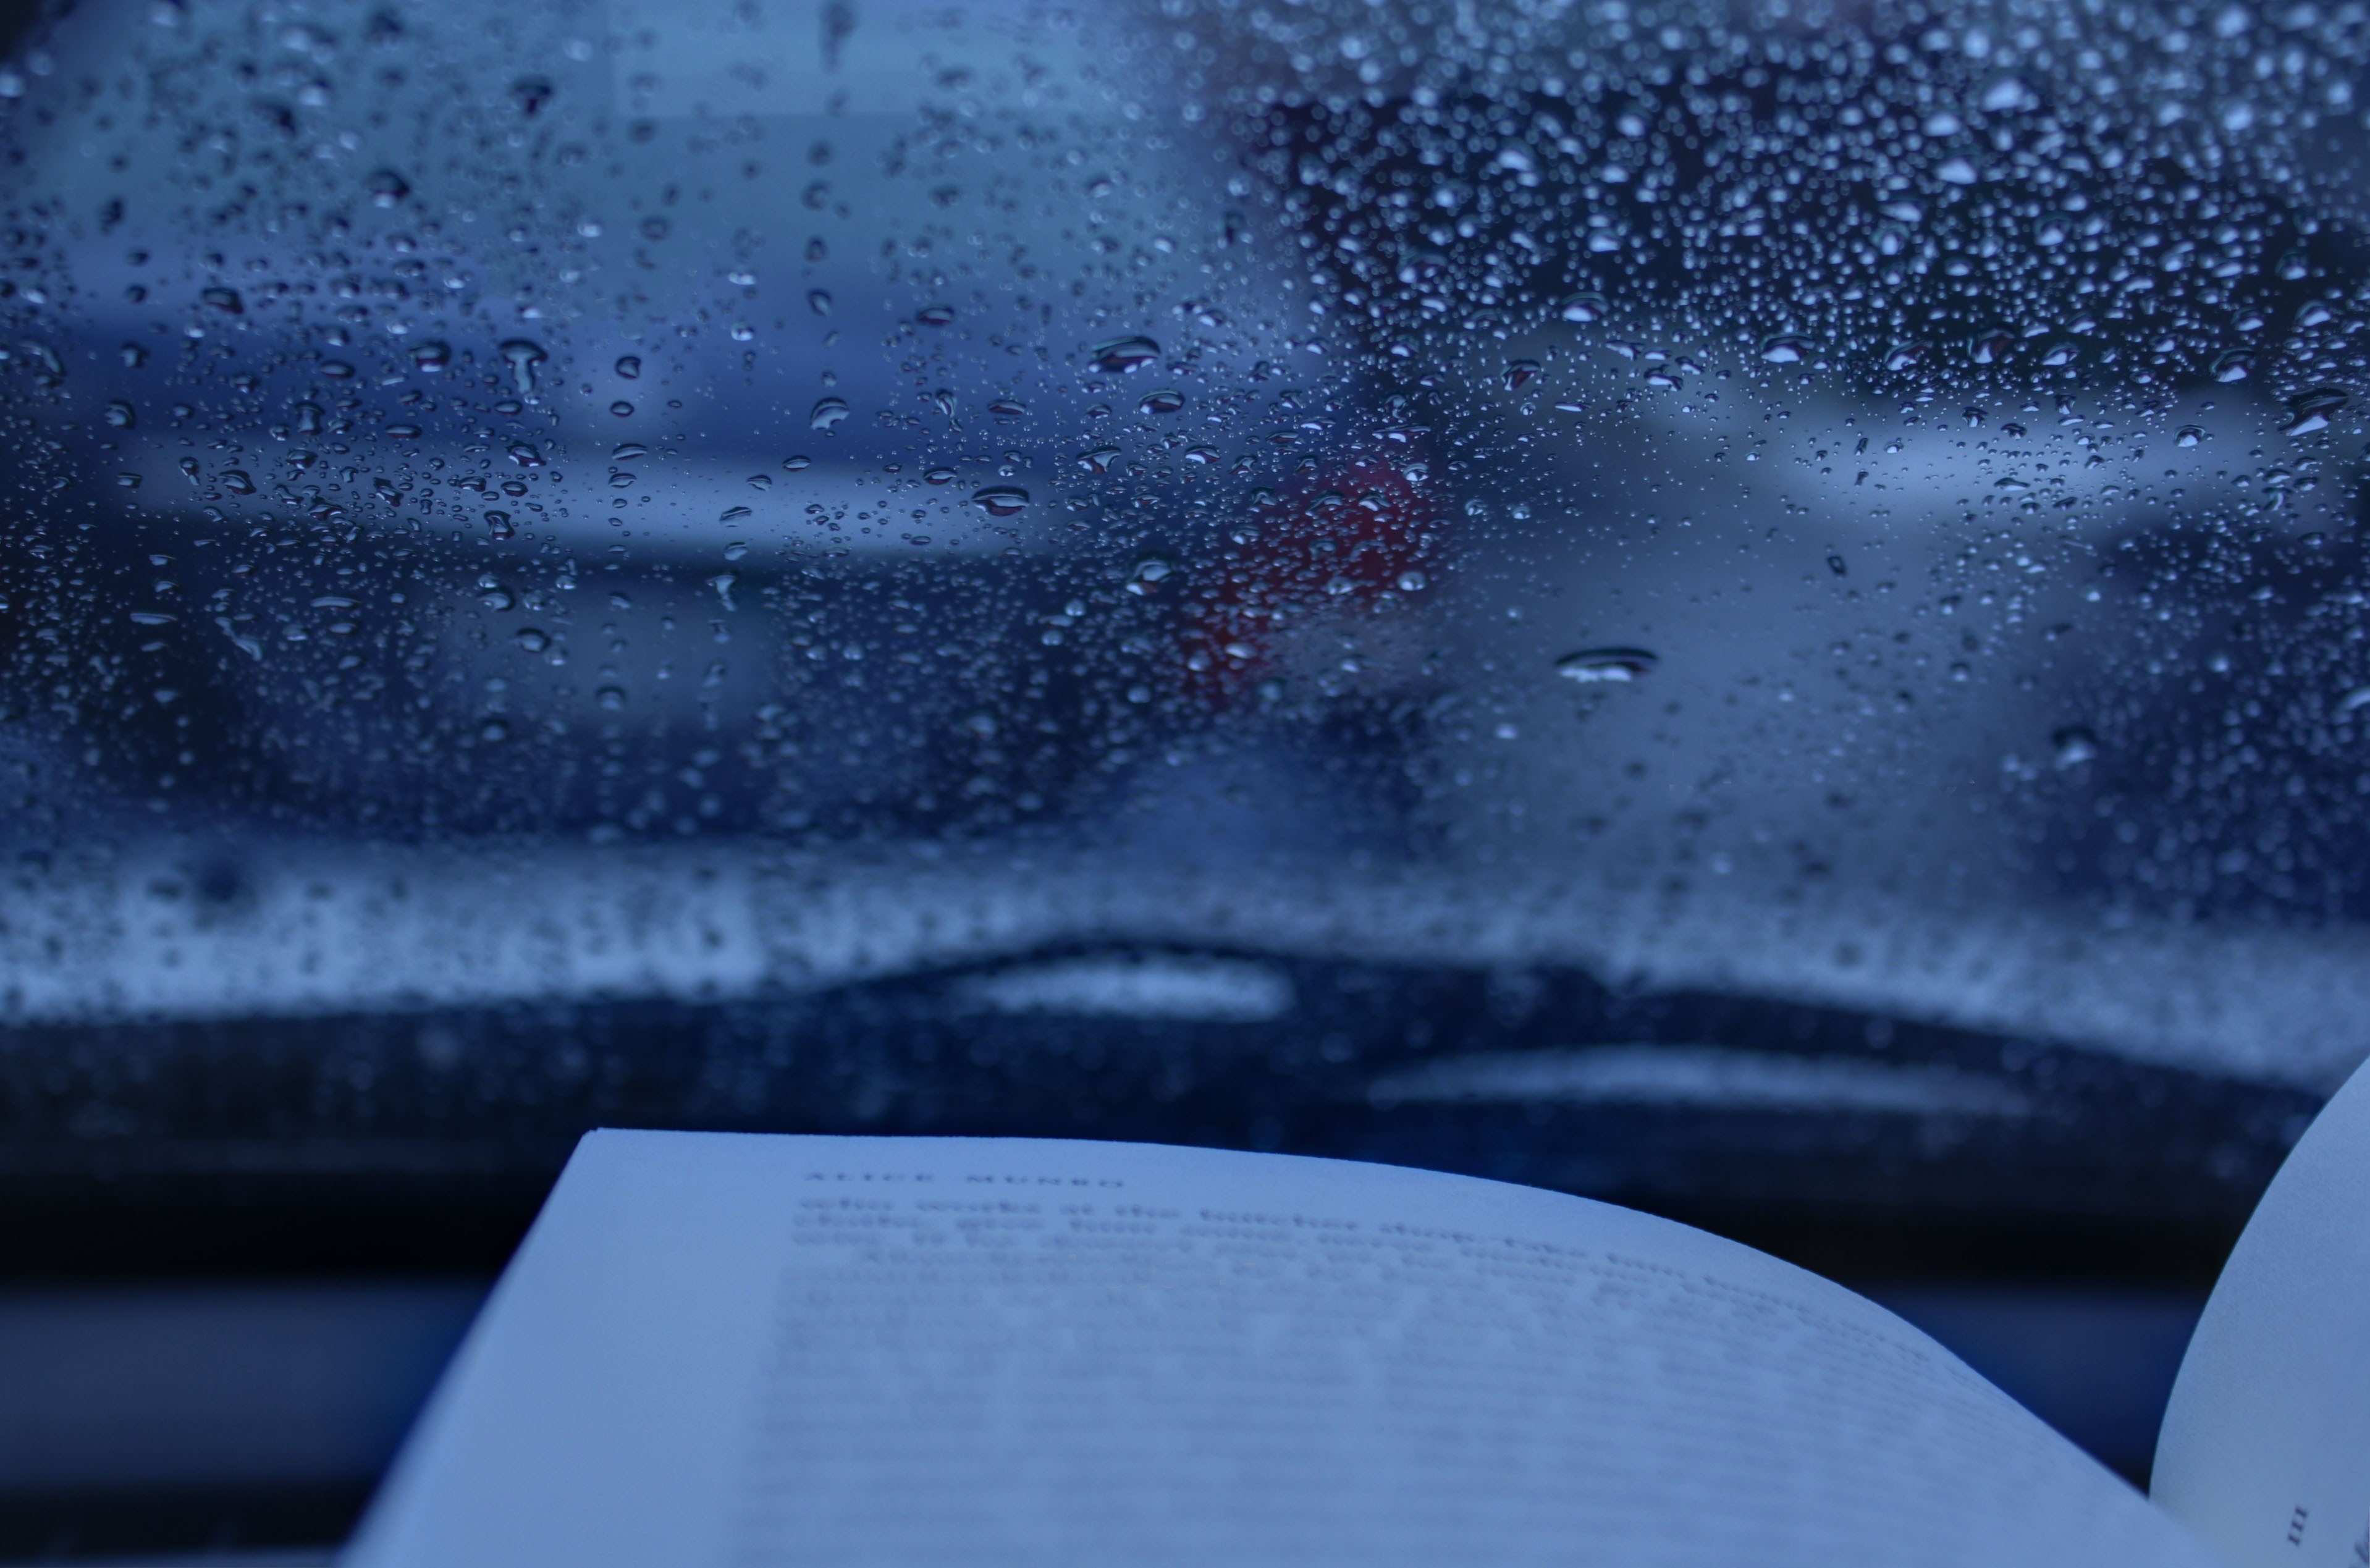 rain, books - desktop wallpaper